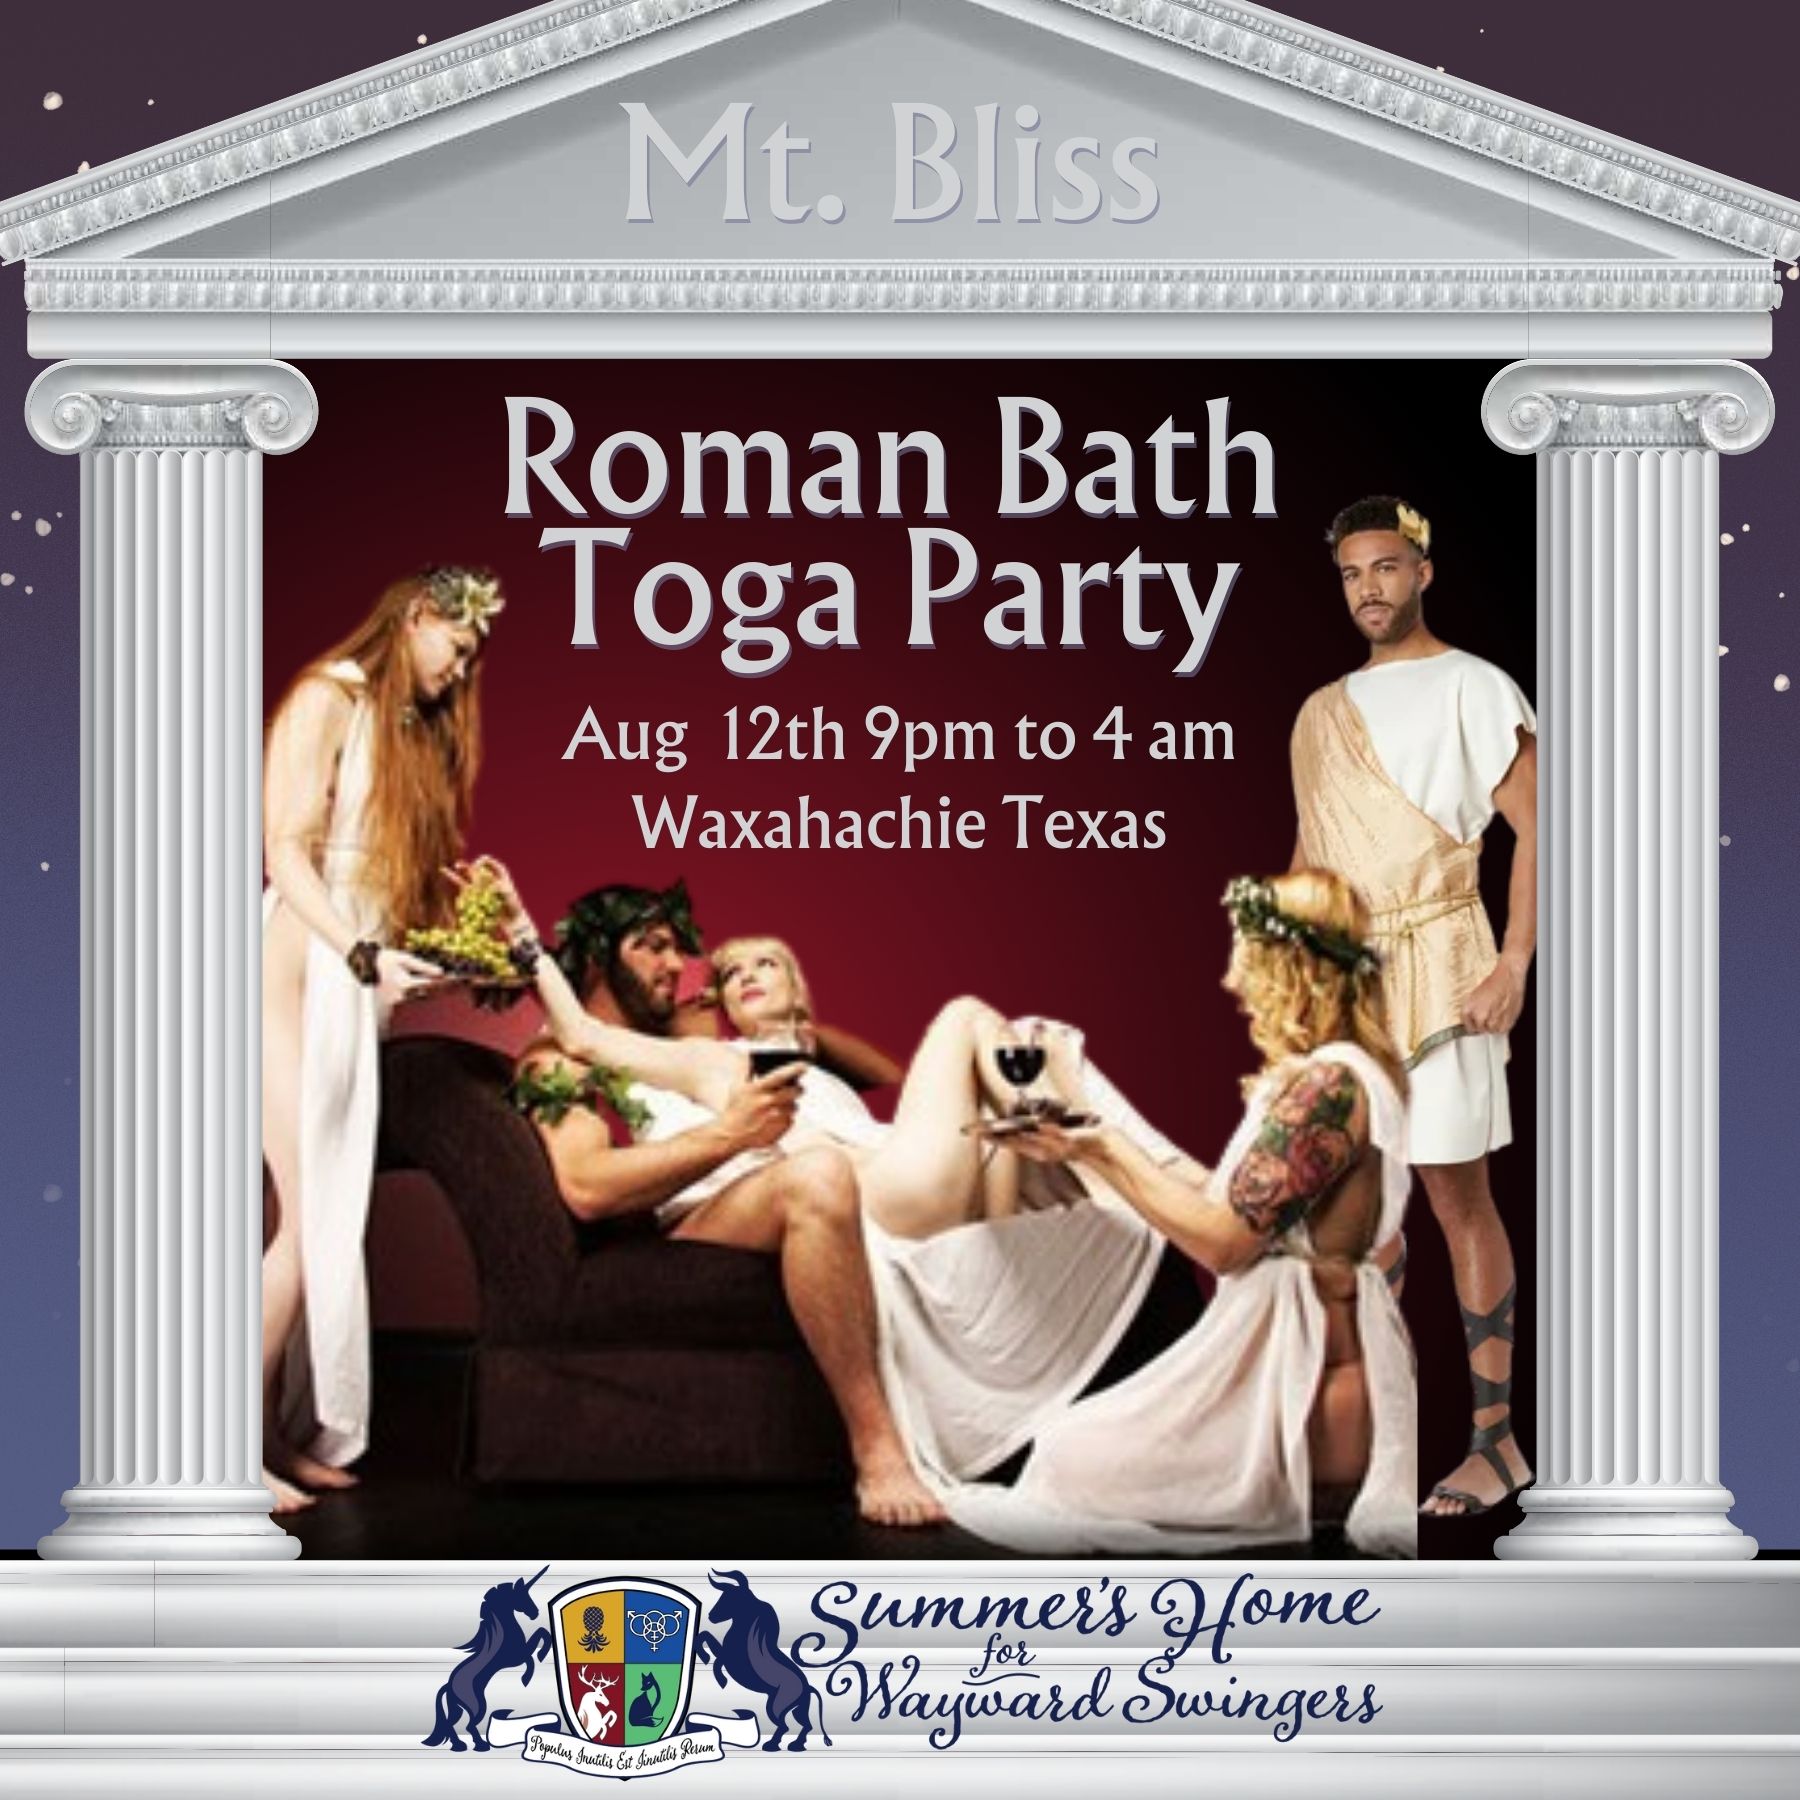 Mt. Bliss Roman Bath Toga Party